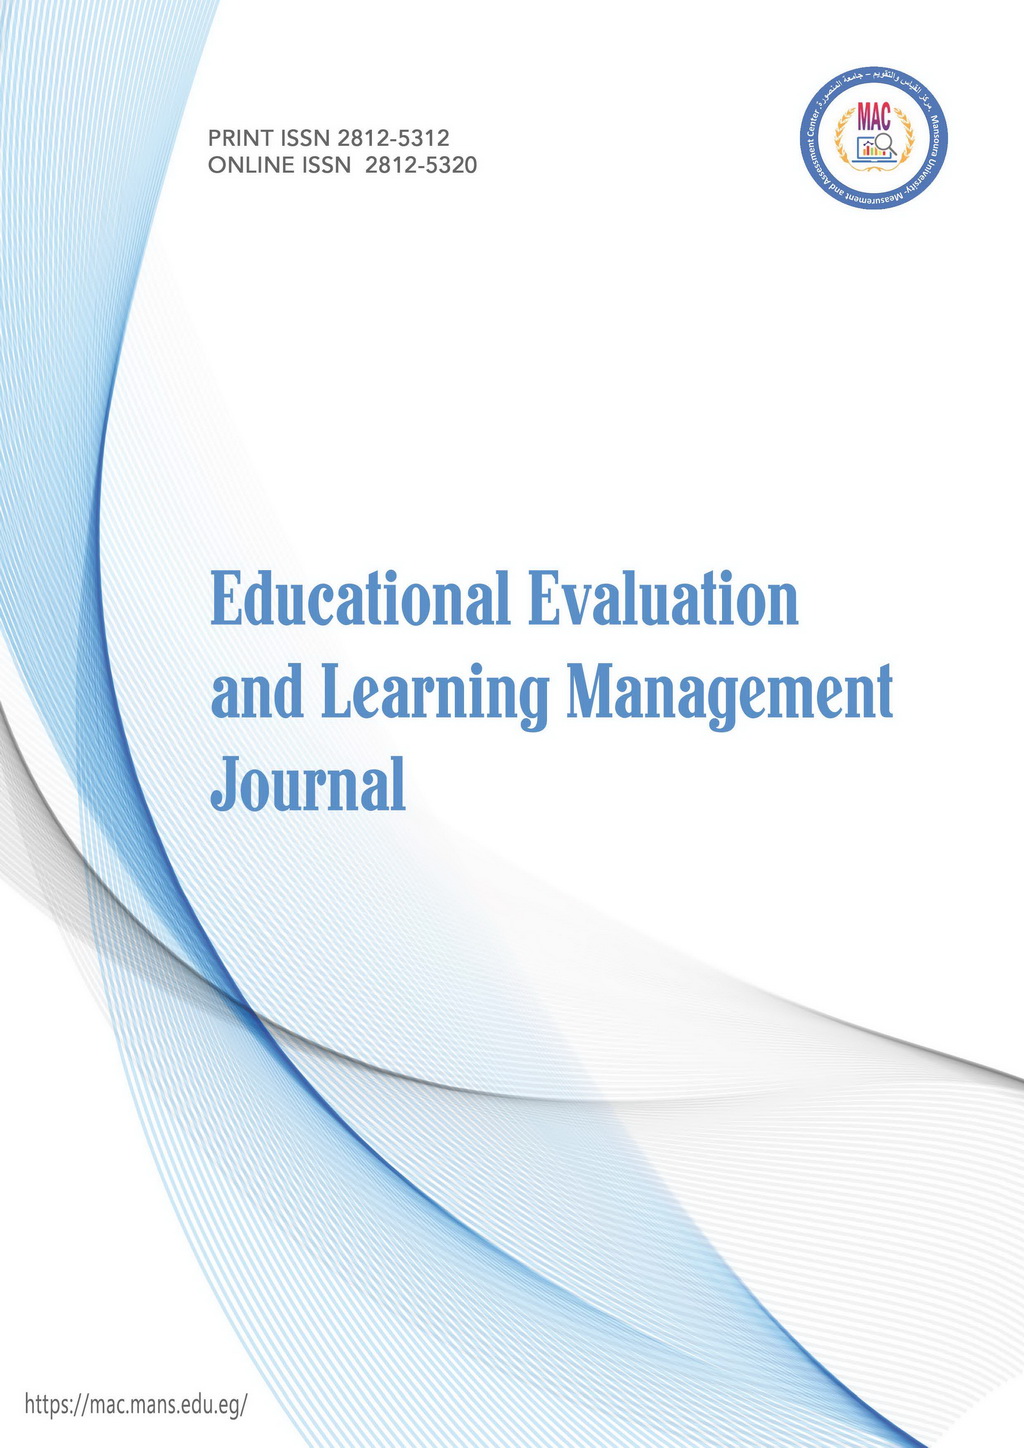 educational evaluation